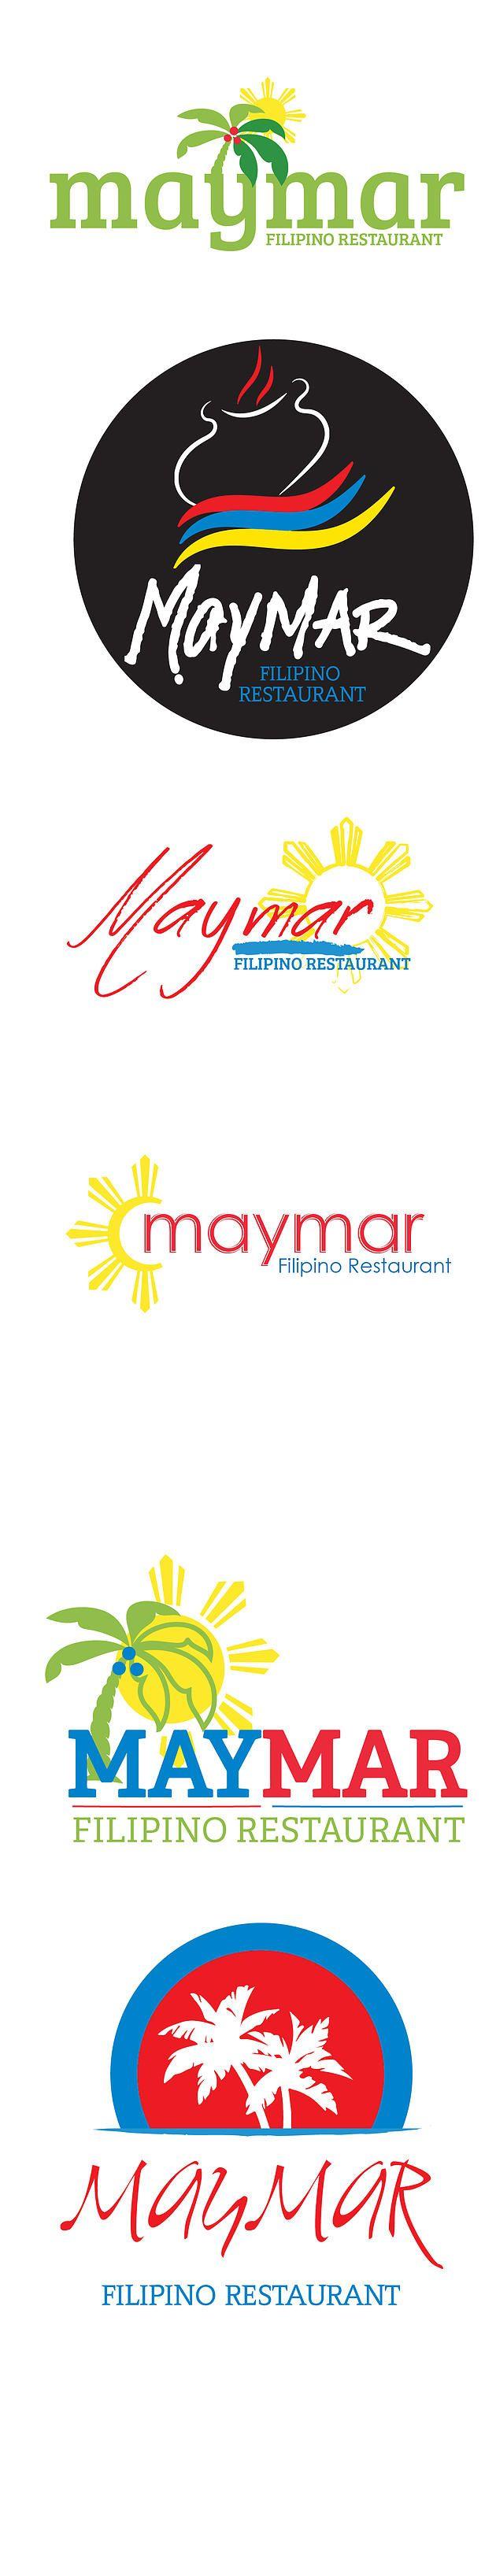 Red and Yellow Sun Logo - Filipino restaurant logo concept ideas chesapeake virginia ethnic ...